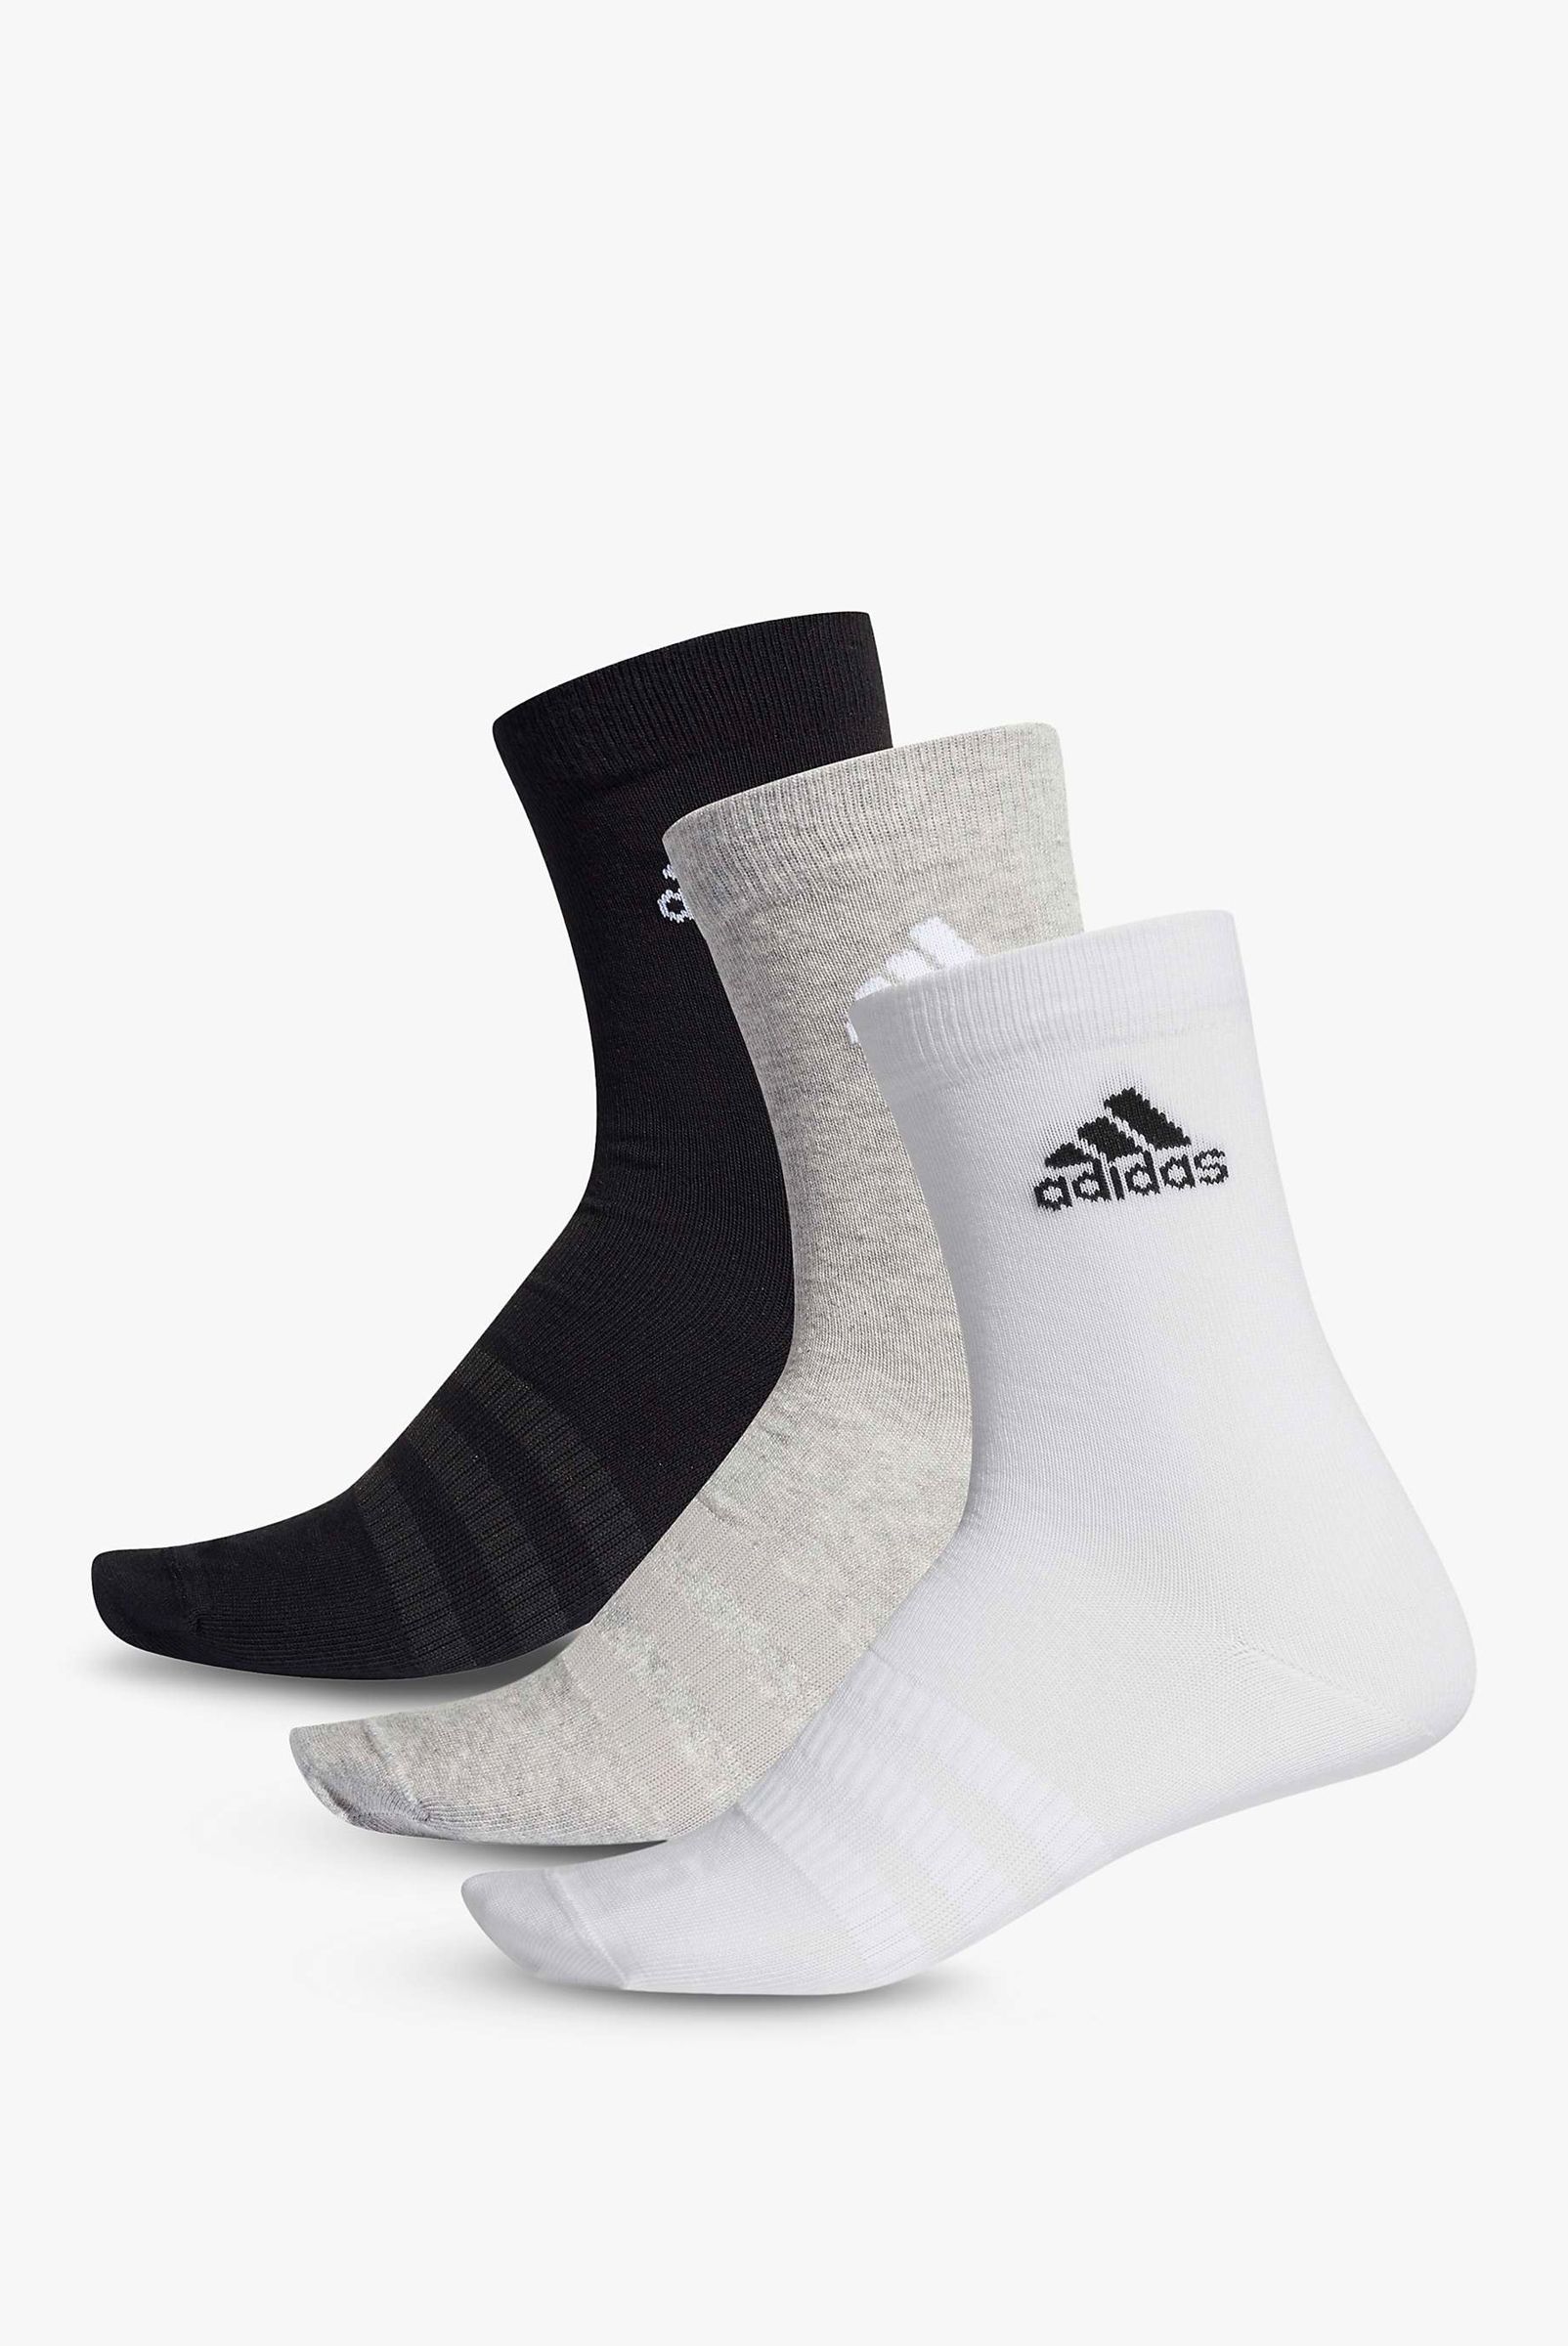 Adidas Light Training Crew Socks, £13